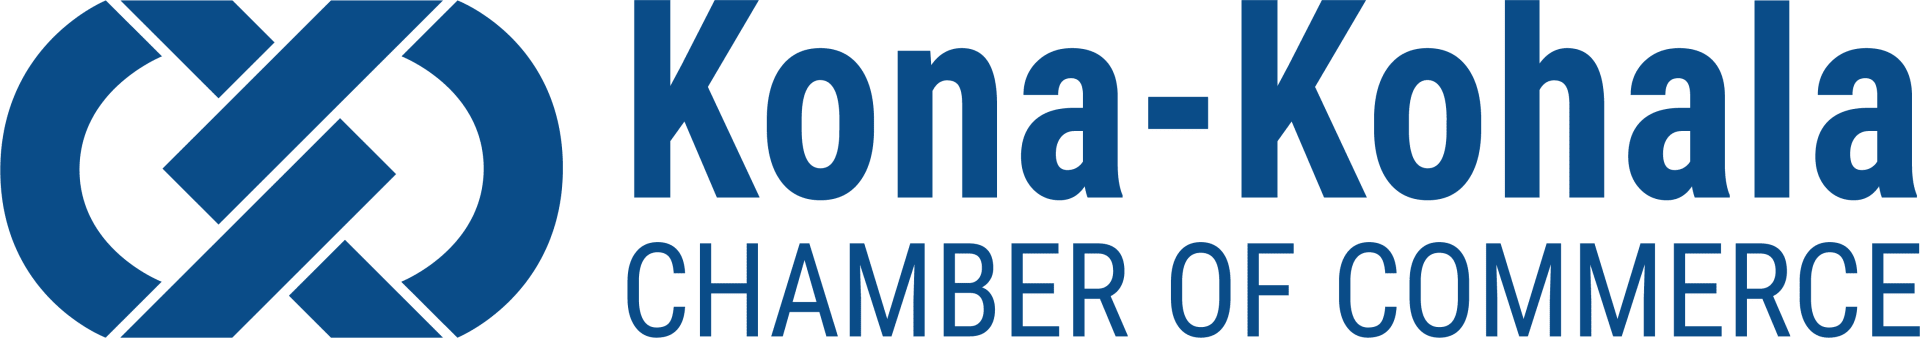 Kona-Kohala Chamber of Commerce LOGO